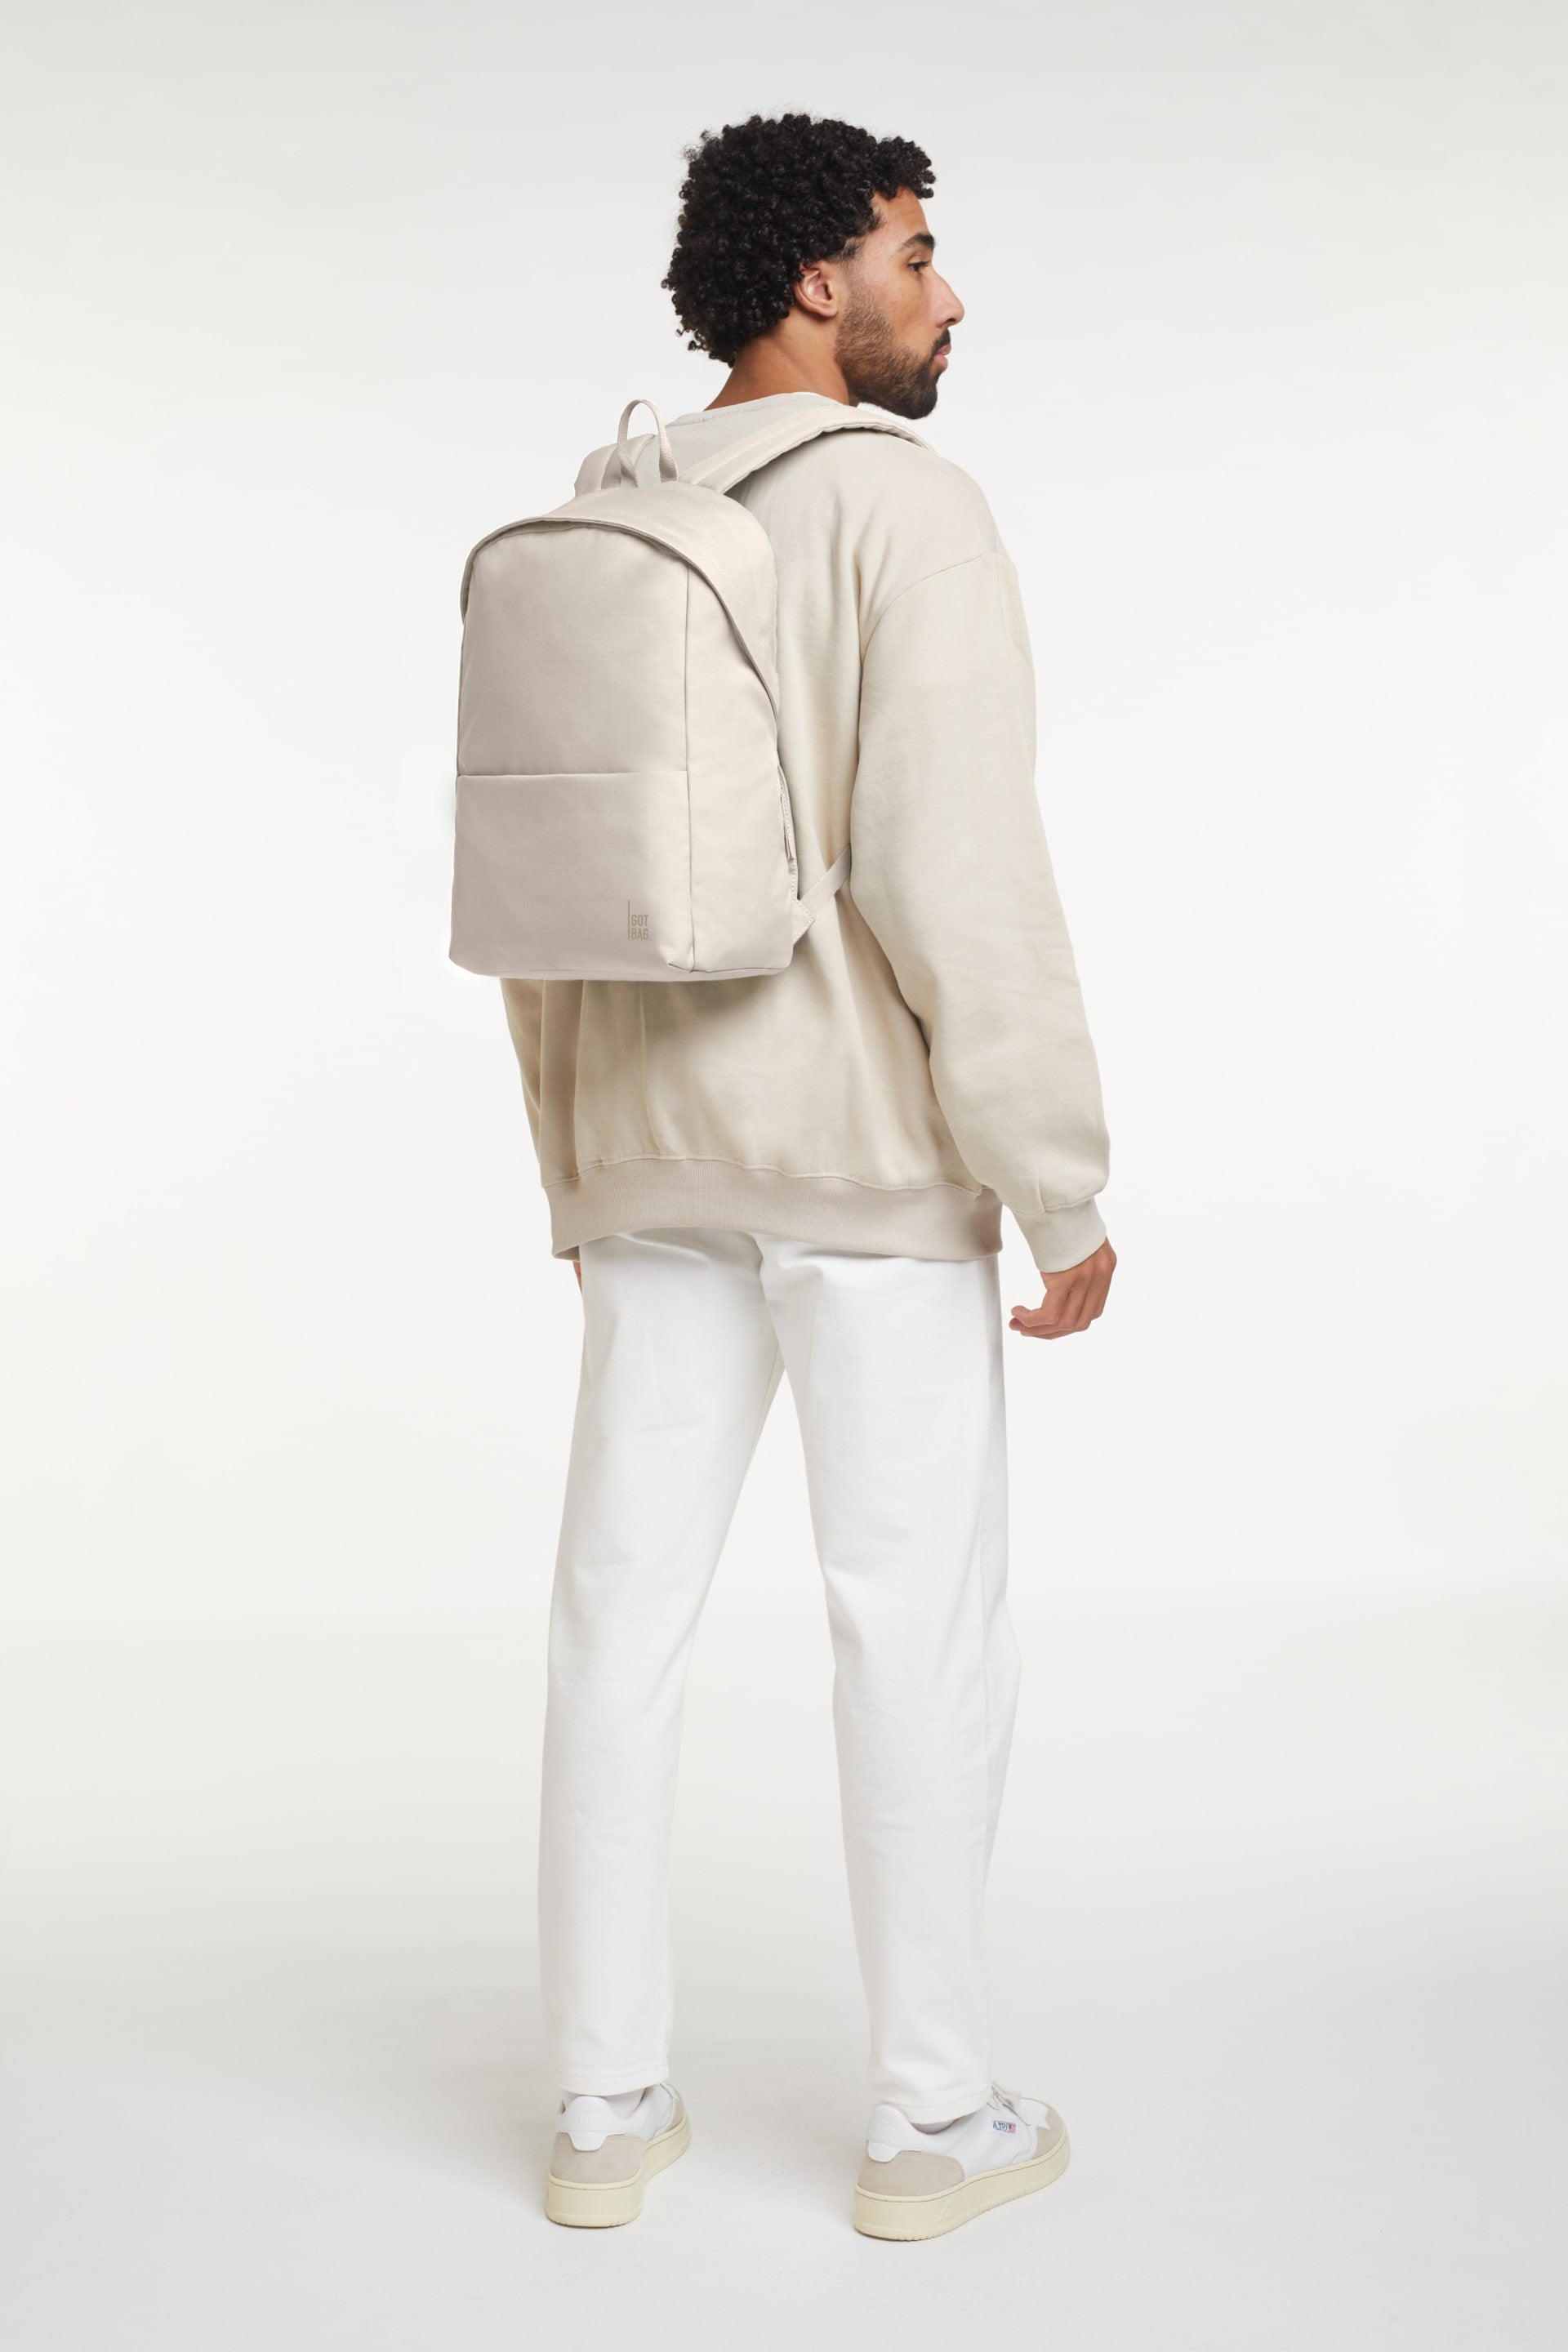 GOT BAG Rolltop backpack for laptop 15'' Algae : Amazon.co.uk: Fashion